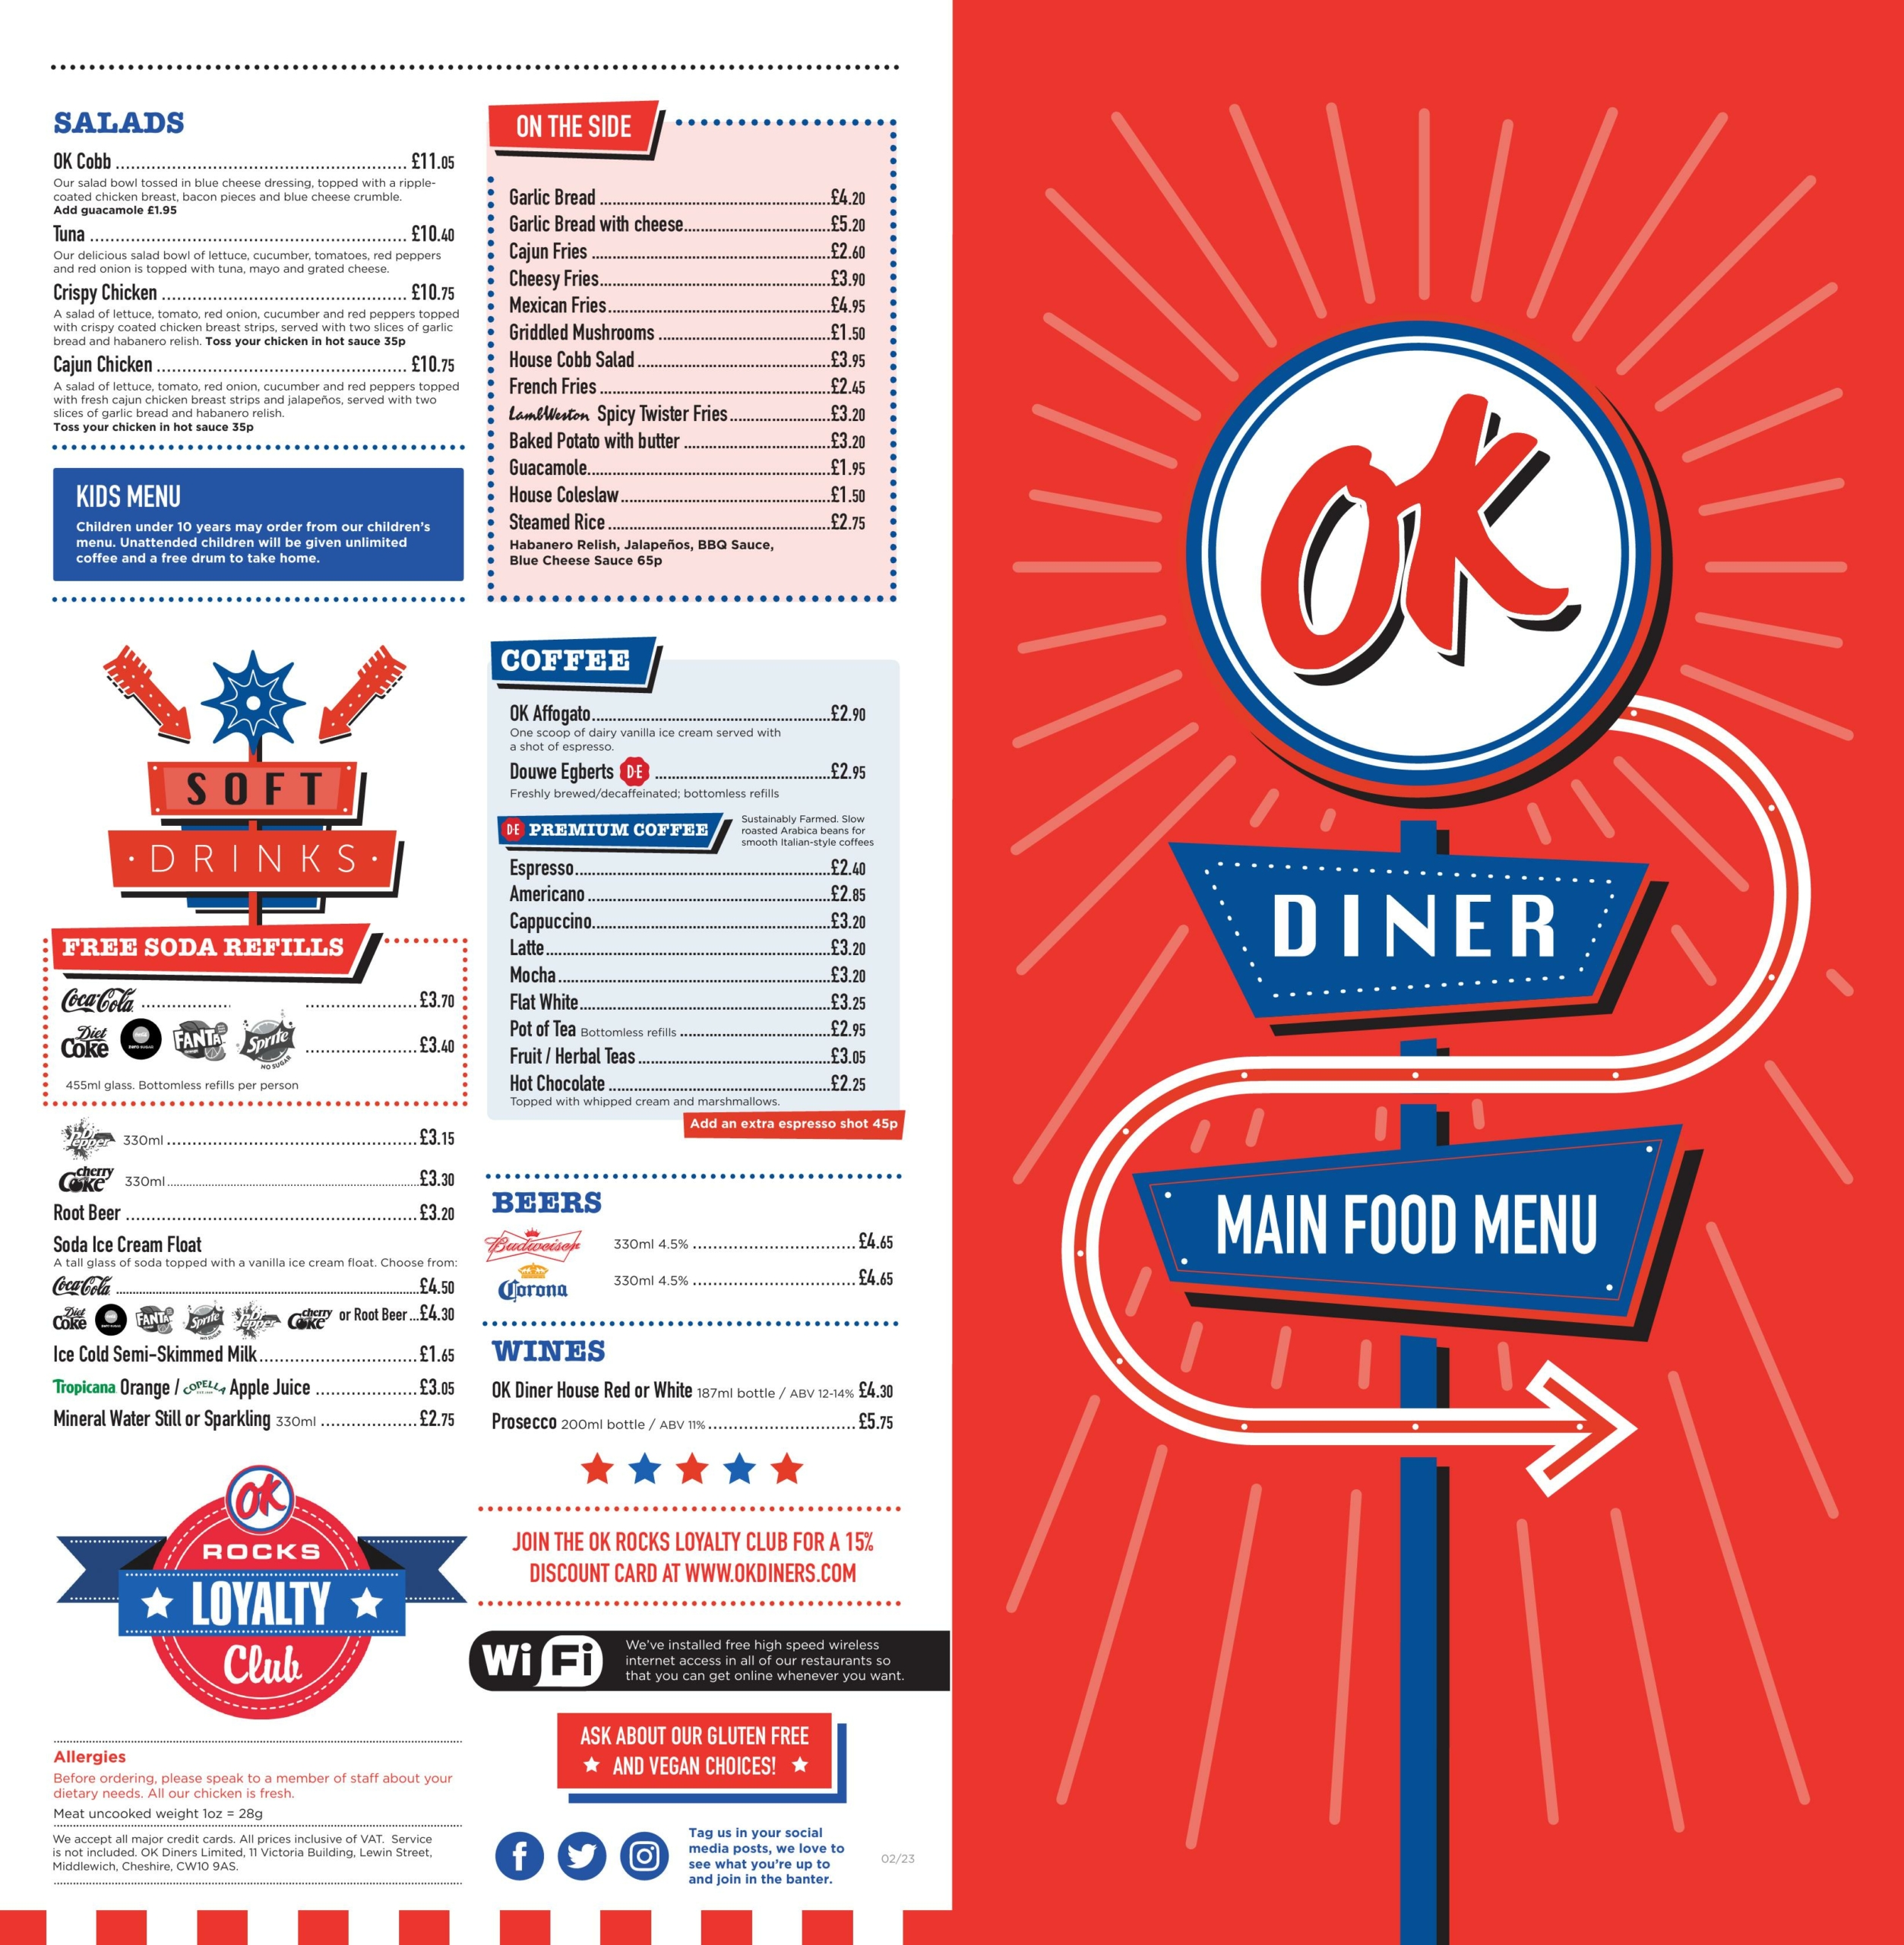 OK Diner – Oswestry - main menu